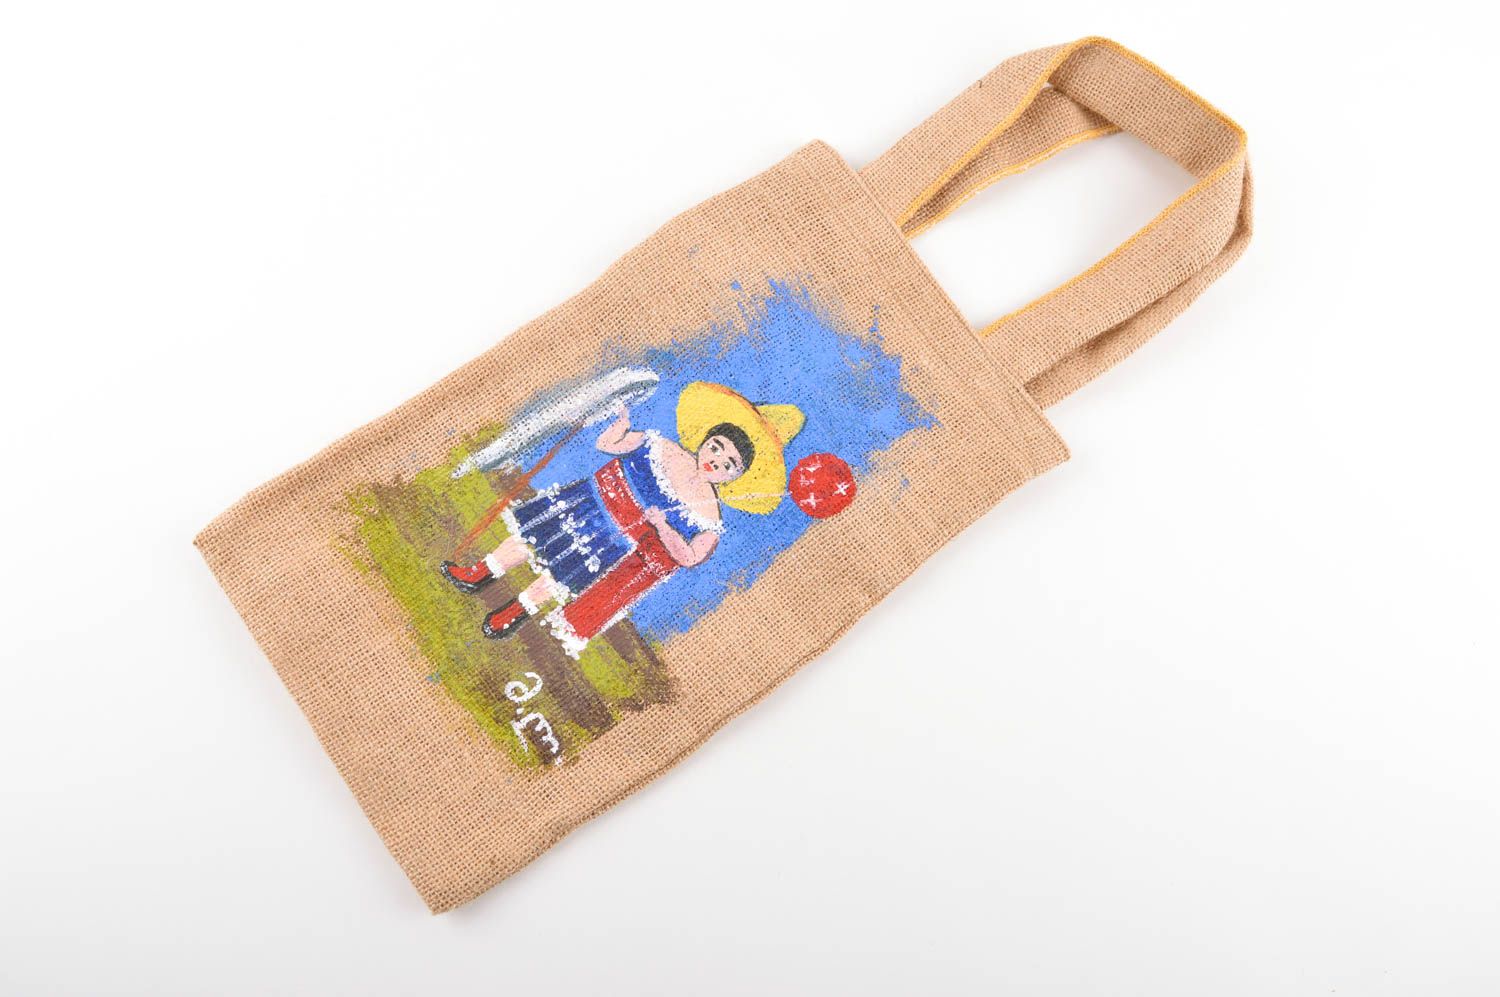 Handmade bag designer bag unusual handbag for women gift ideas textile bag photo 1